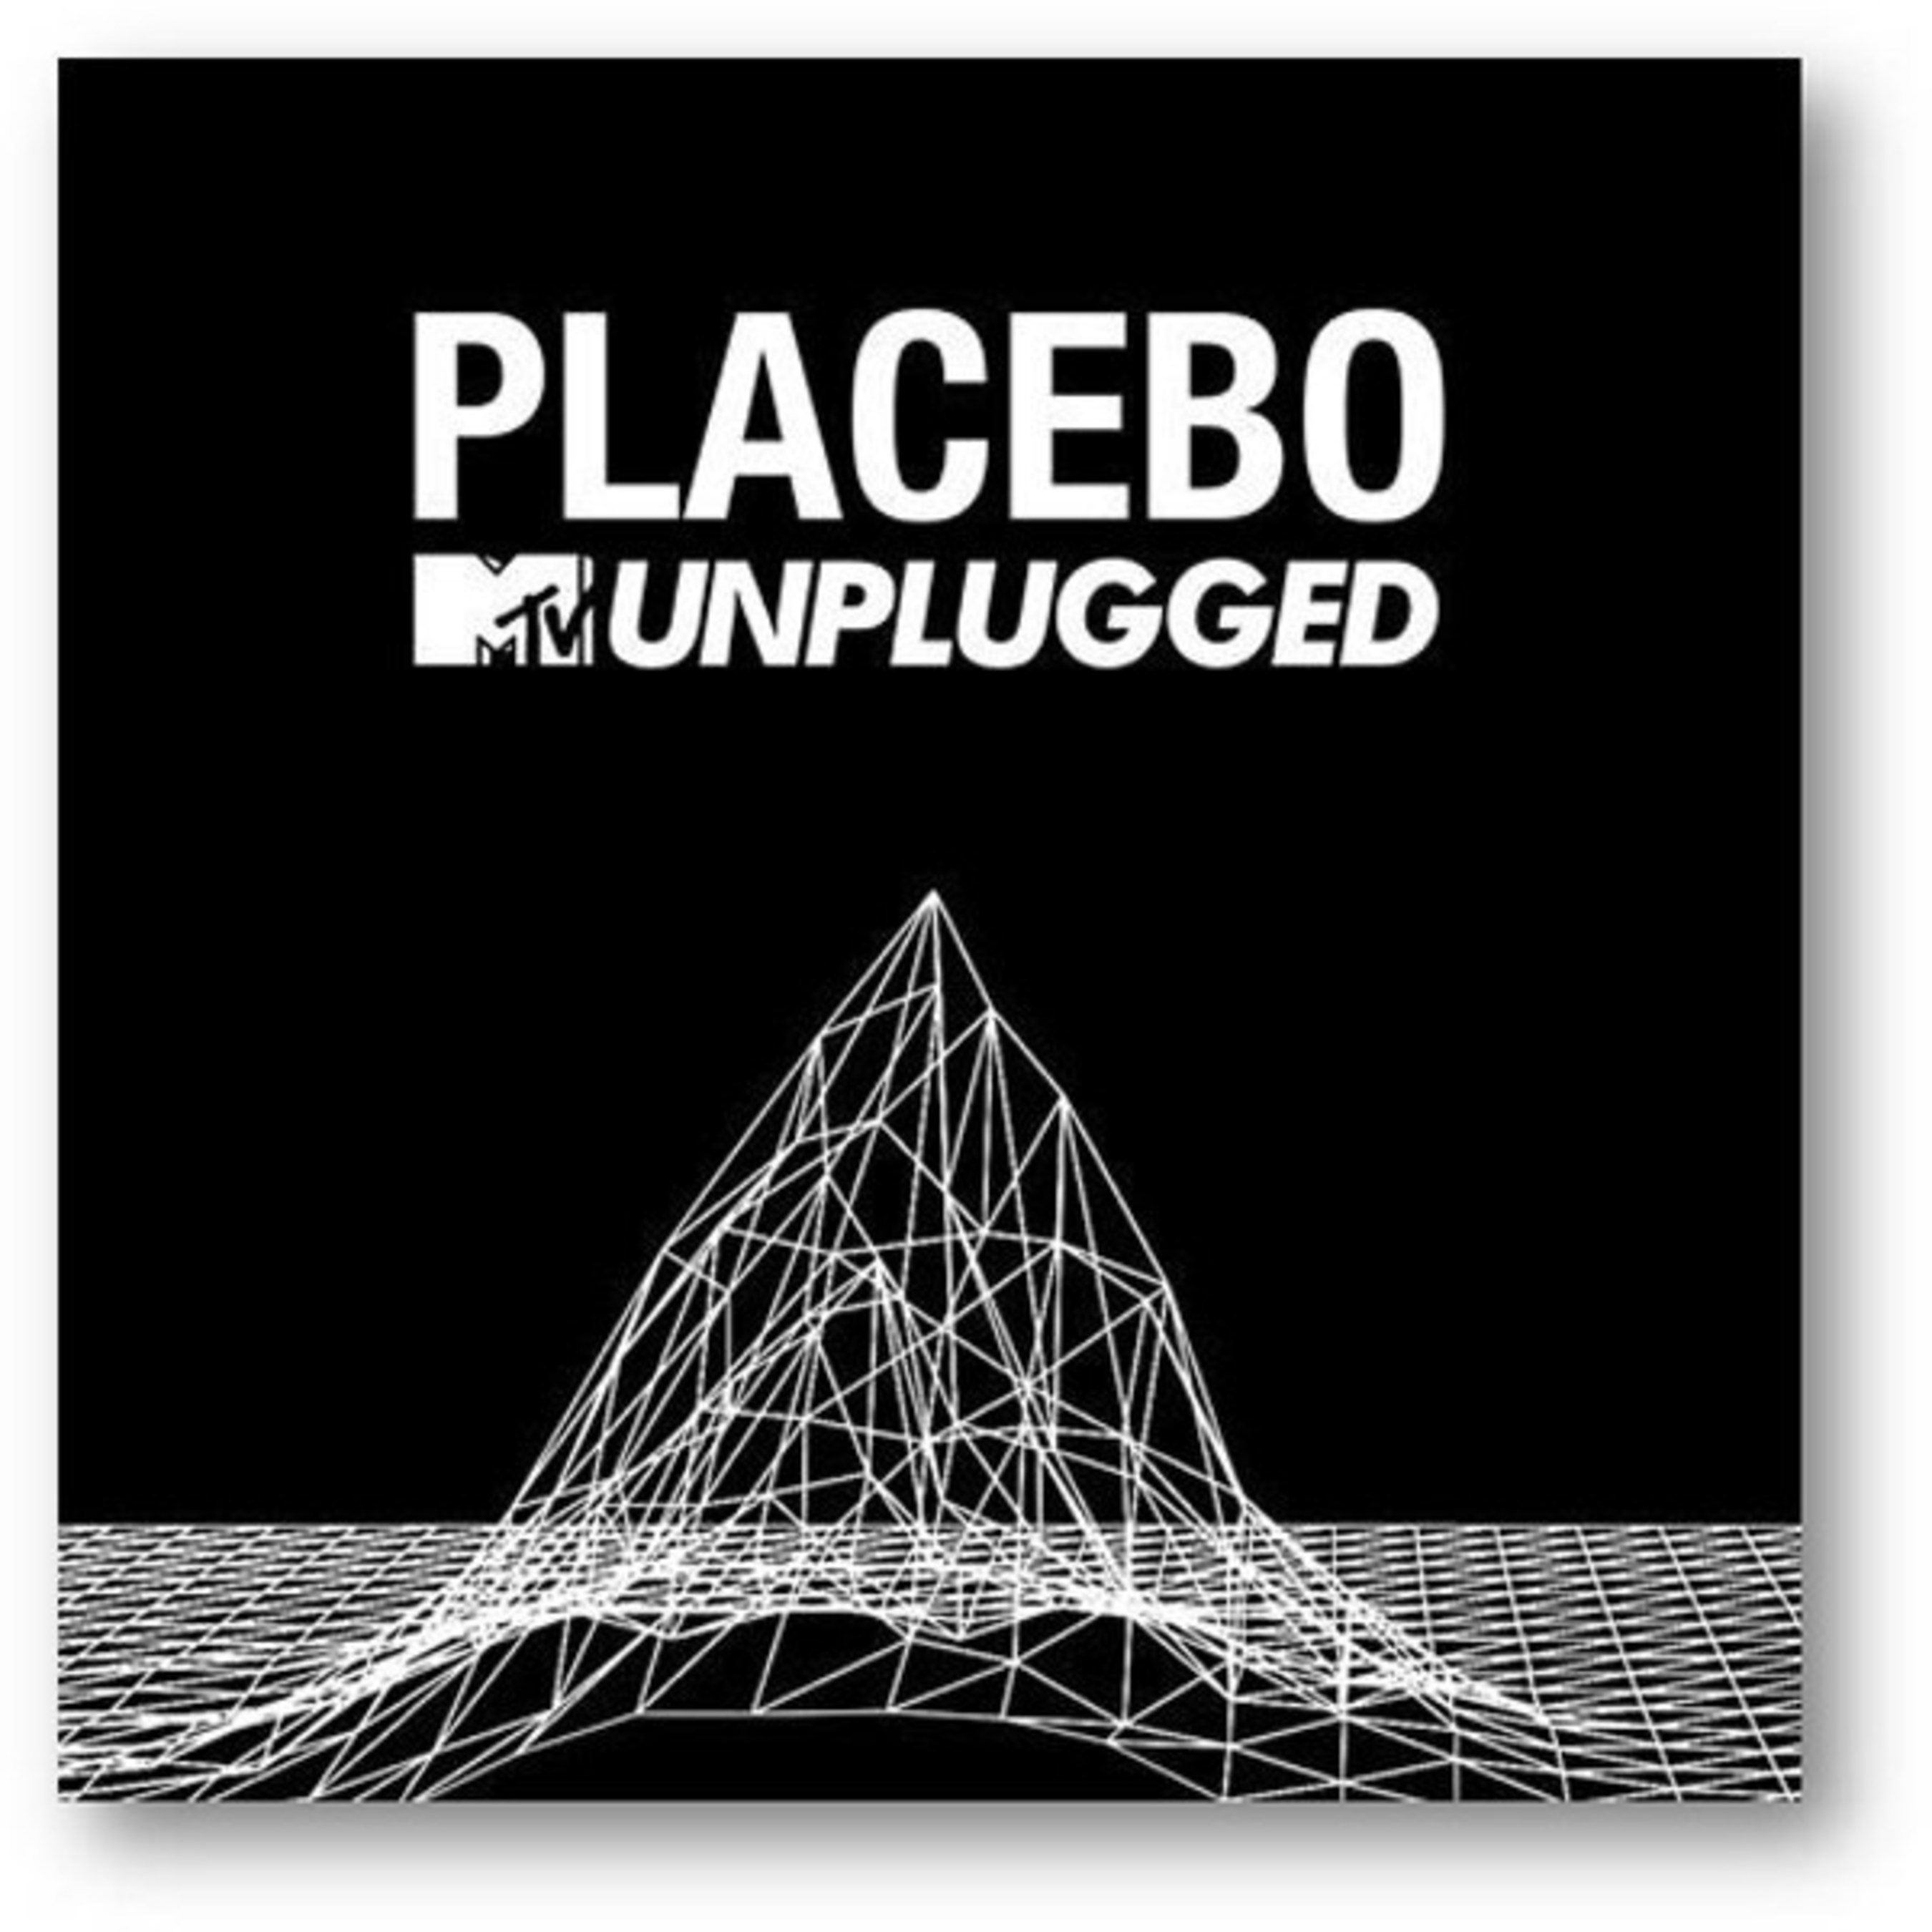 Placebo "MTV Unplugged" 27th Nov 2015